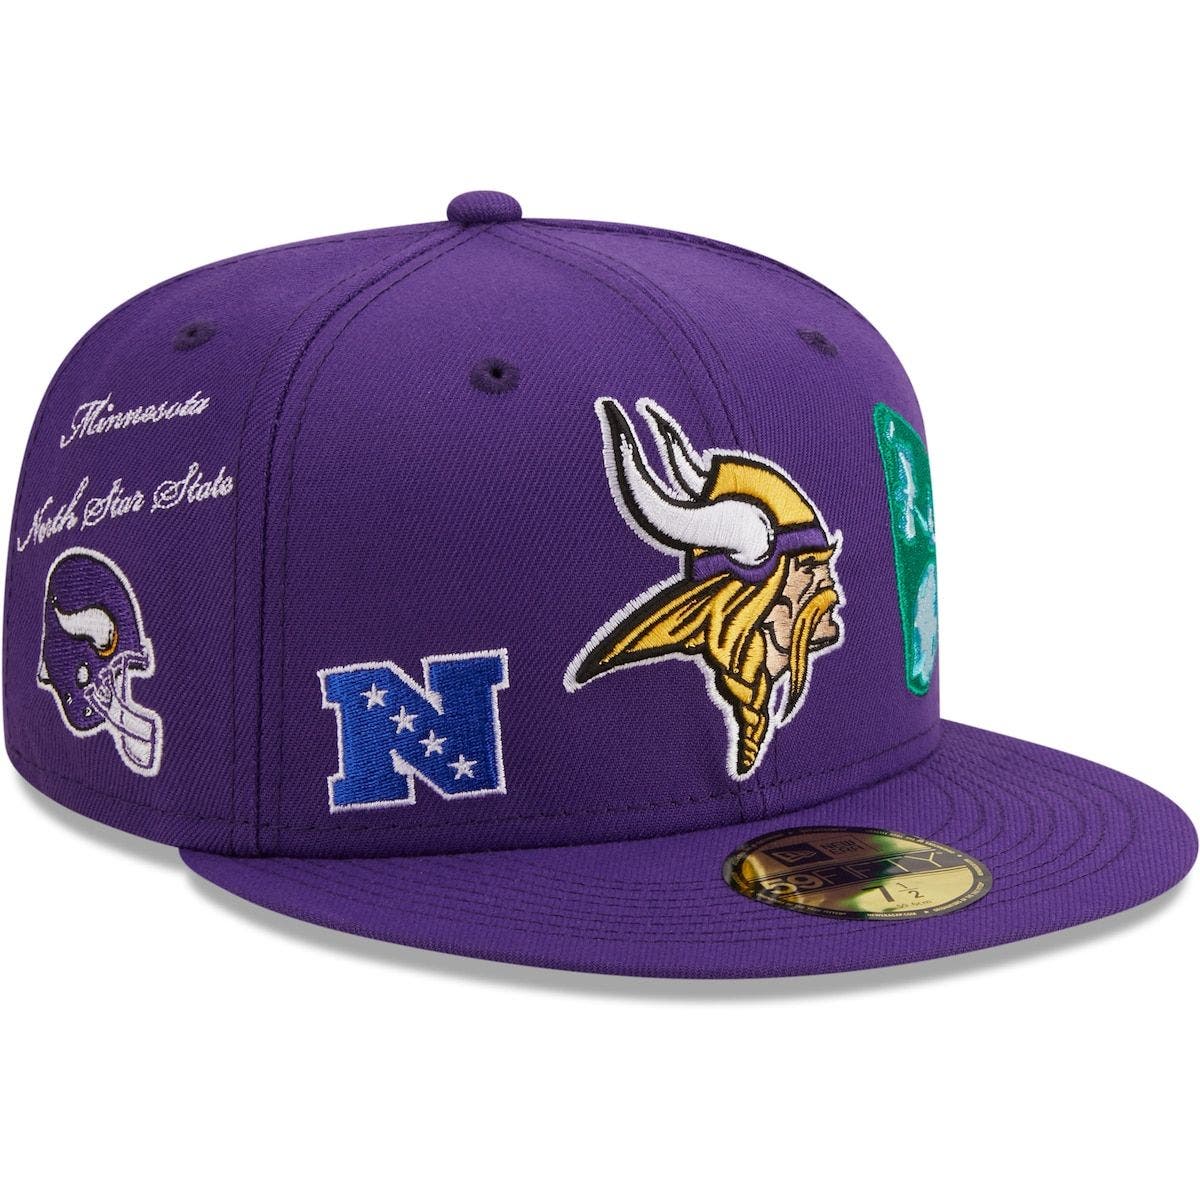 S/M New Era Snapback Cap Sideline Away Minnesota Vikings 